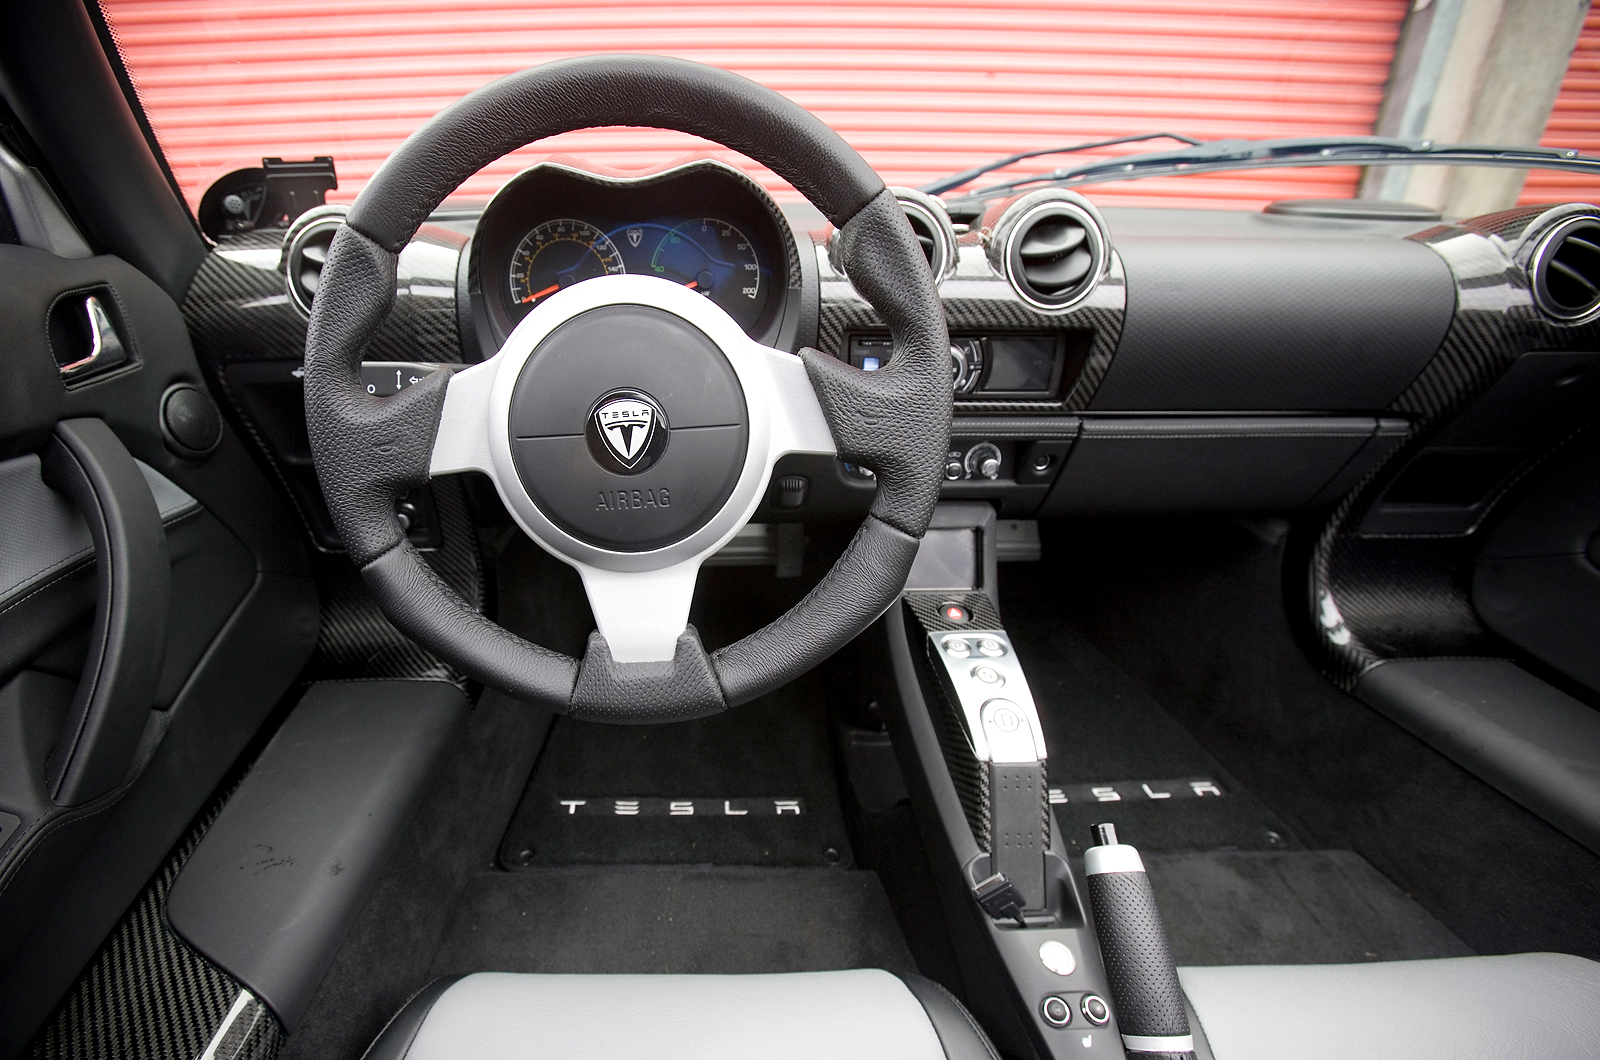 Tesla Roadster dashboard